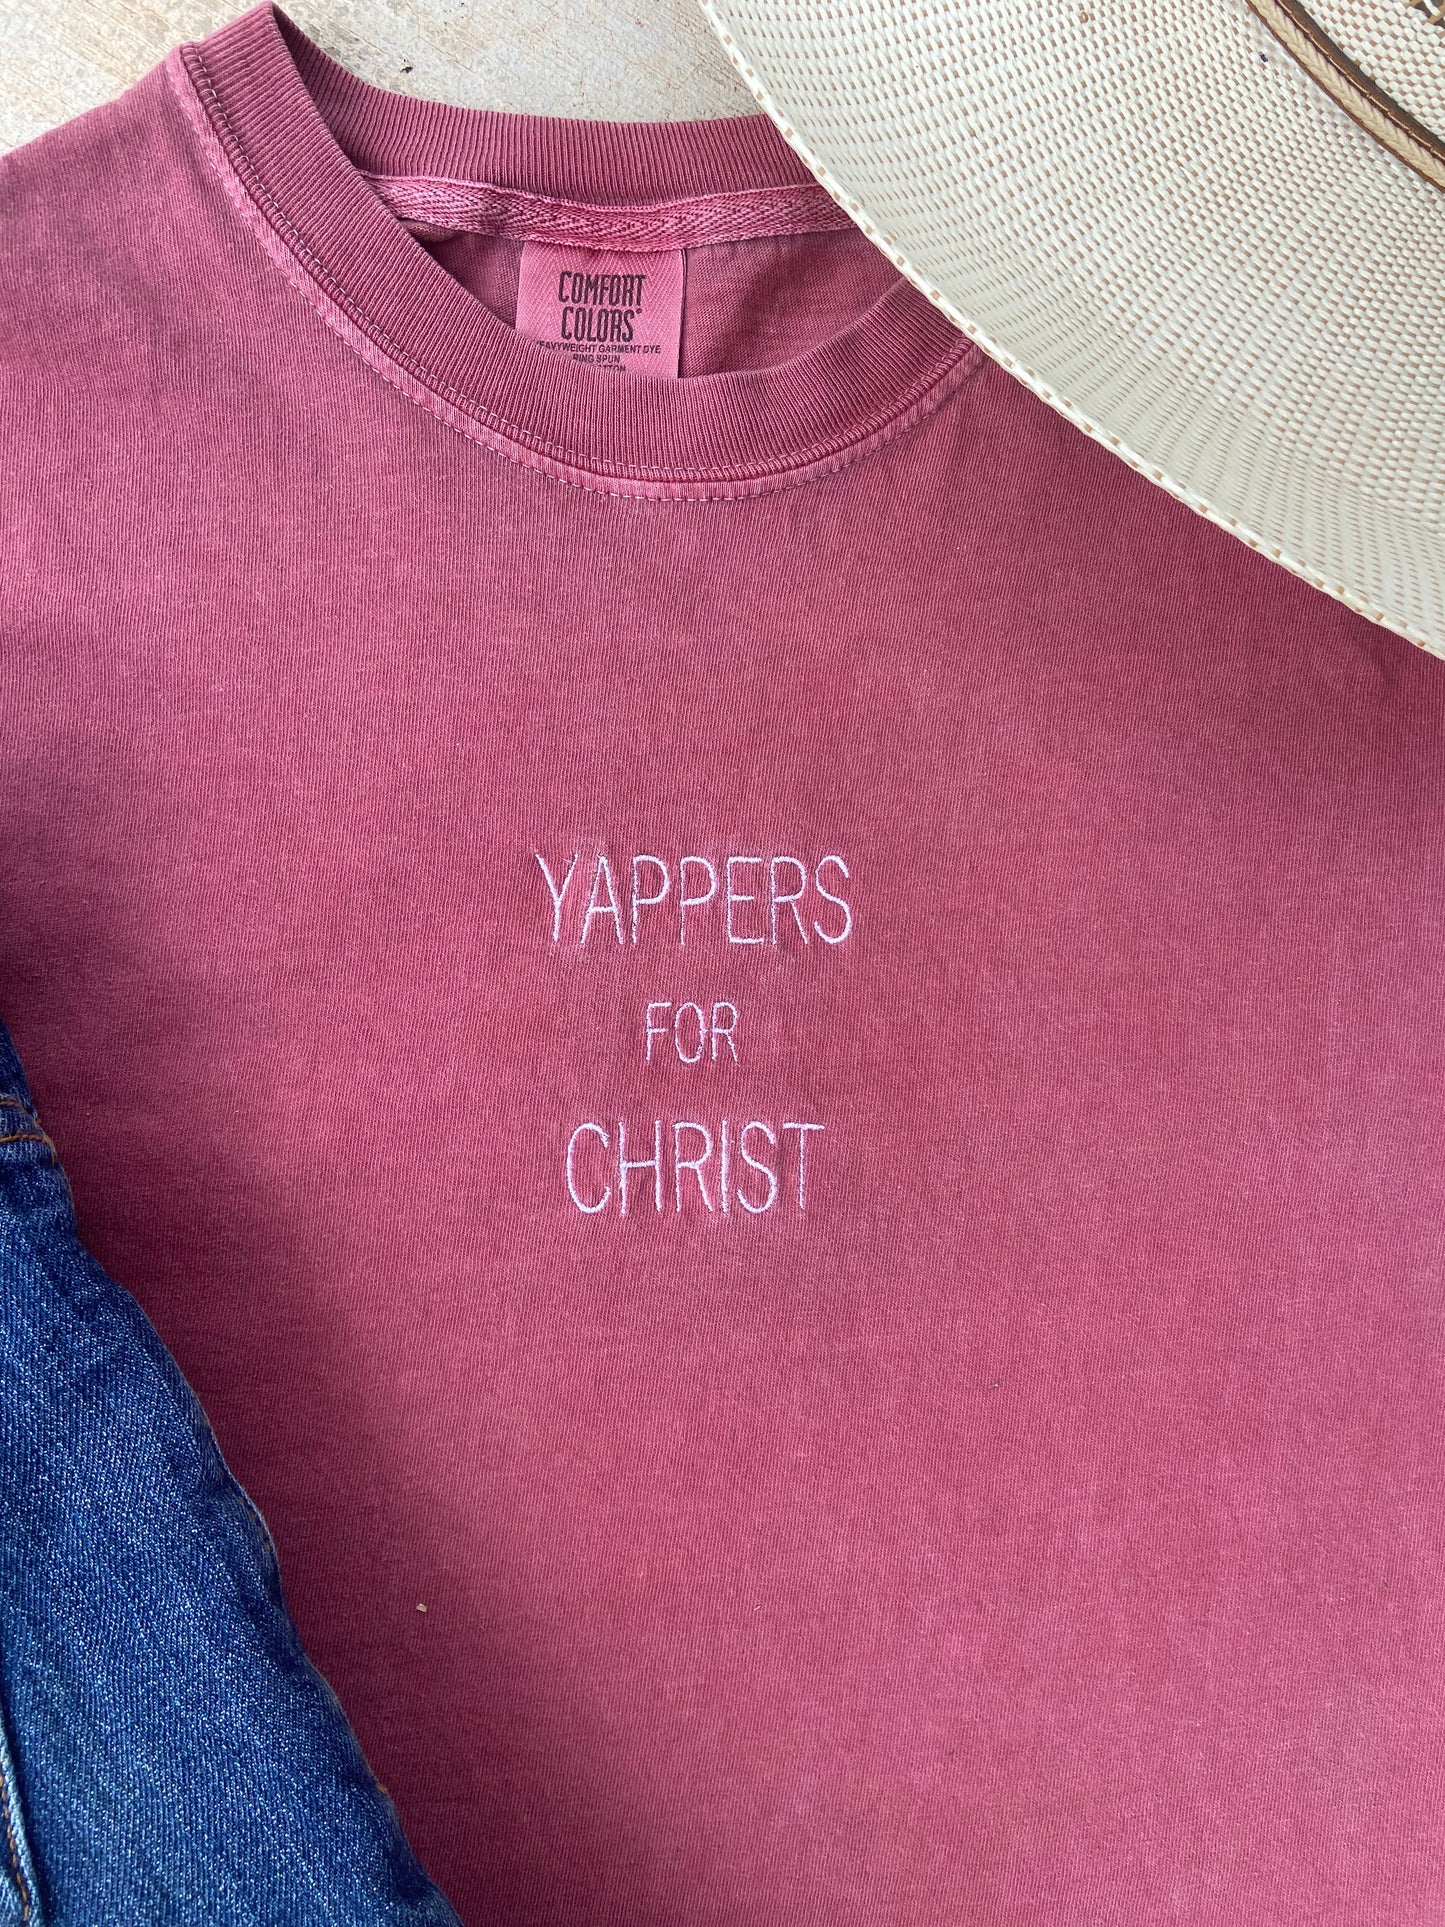 Yapper for Christ Tee